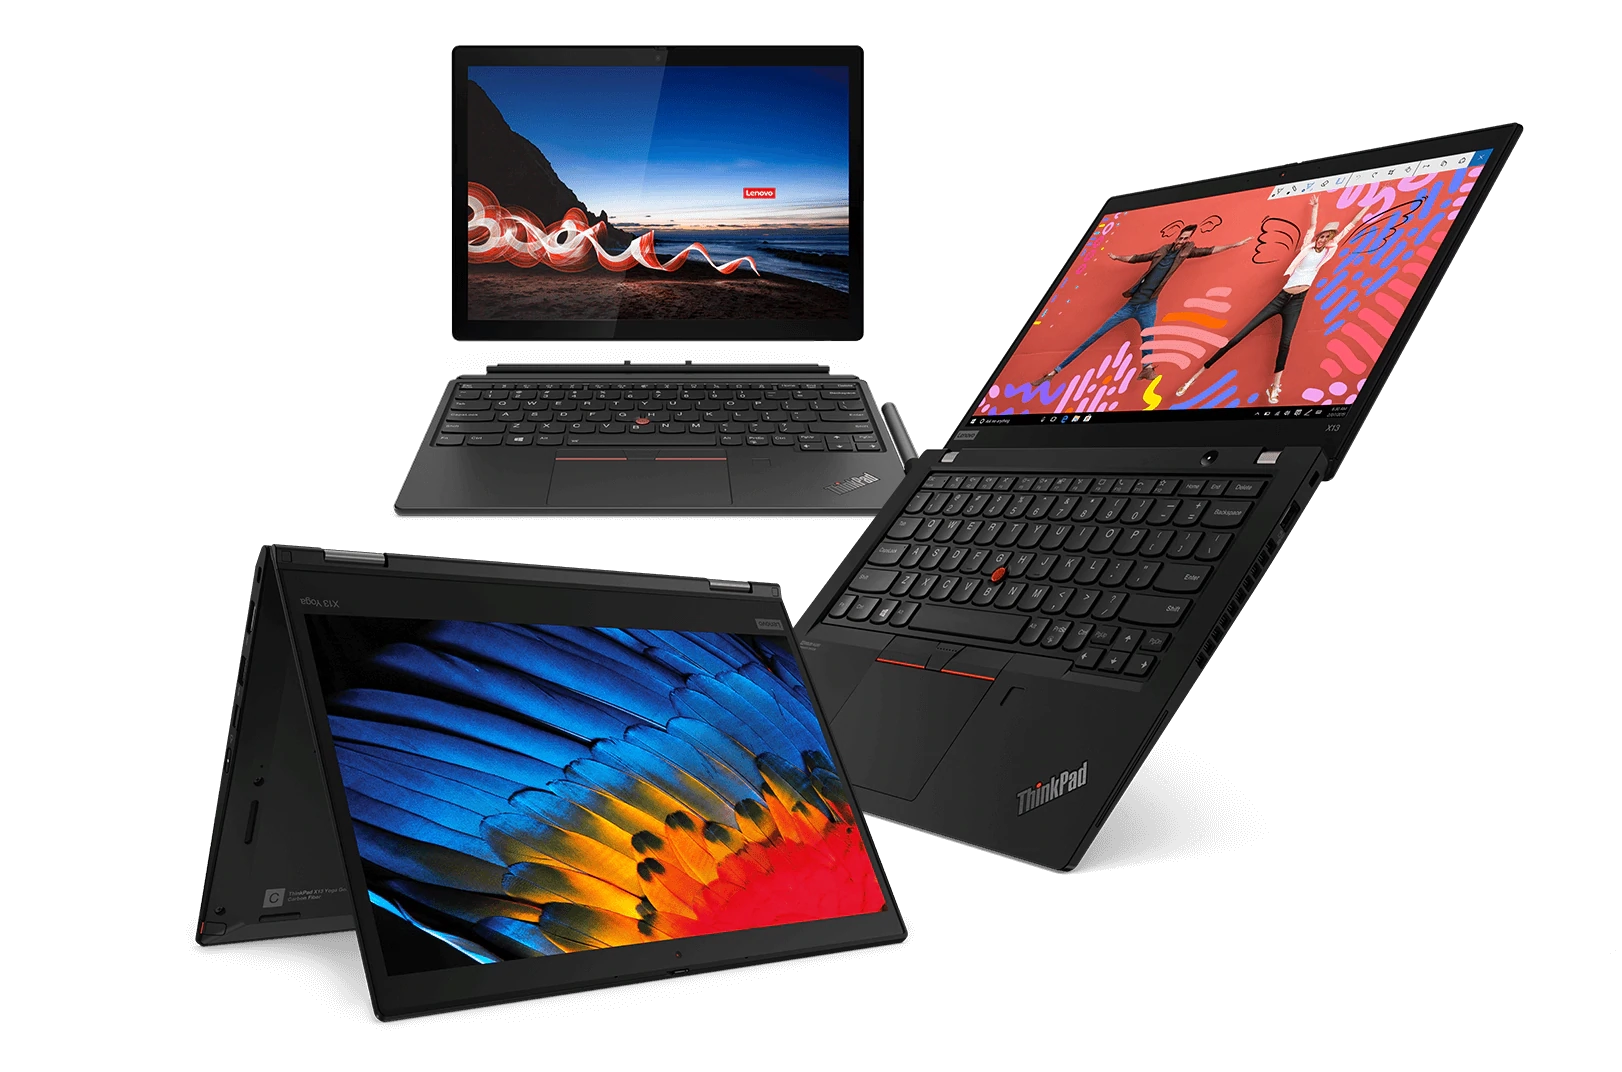 Lenovo ThinkPad X series family of products